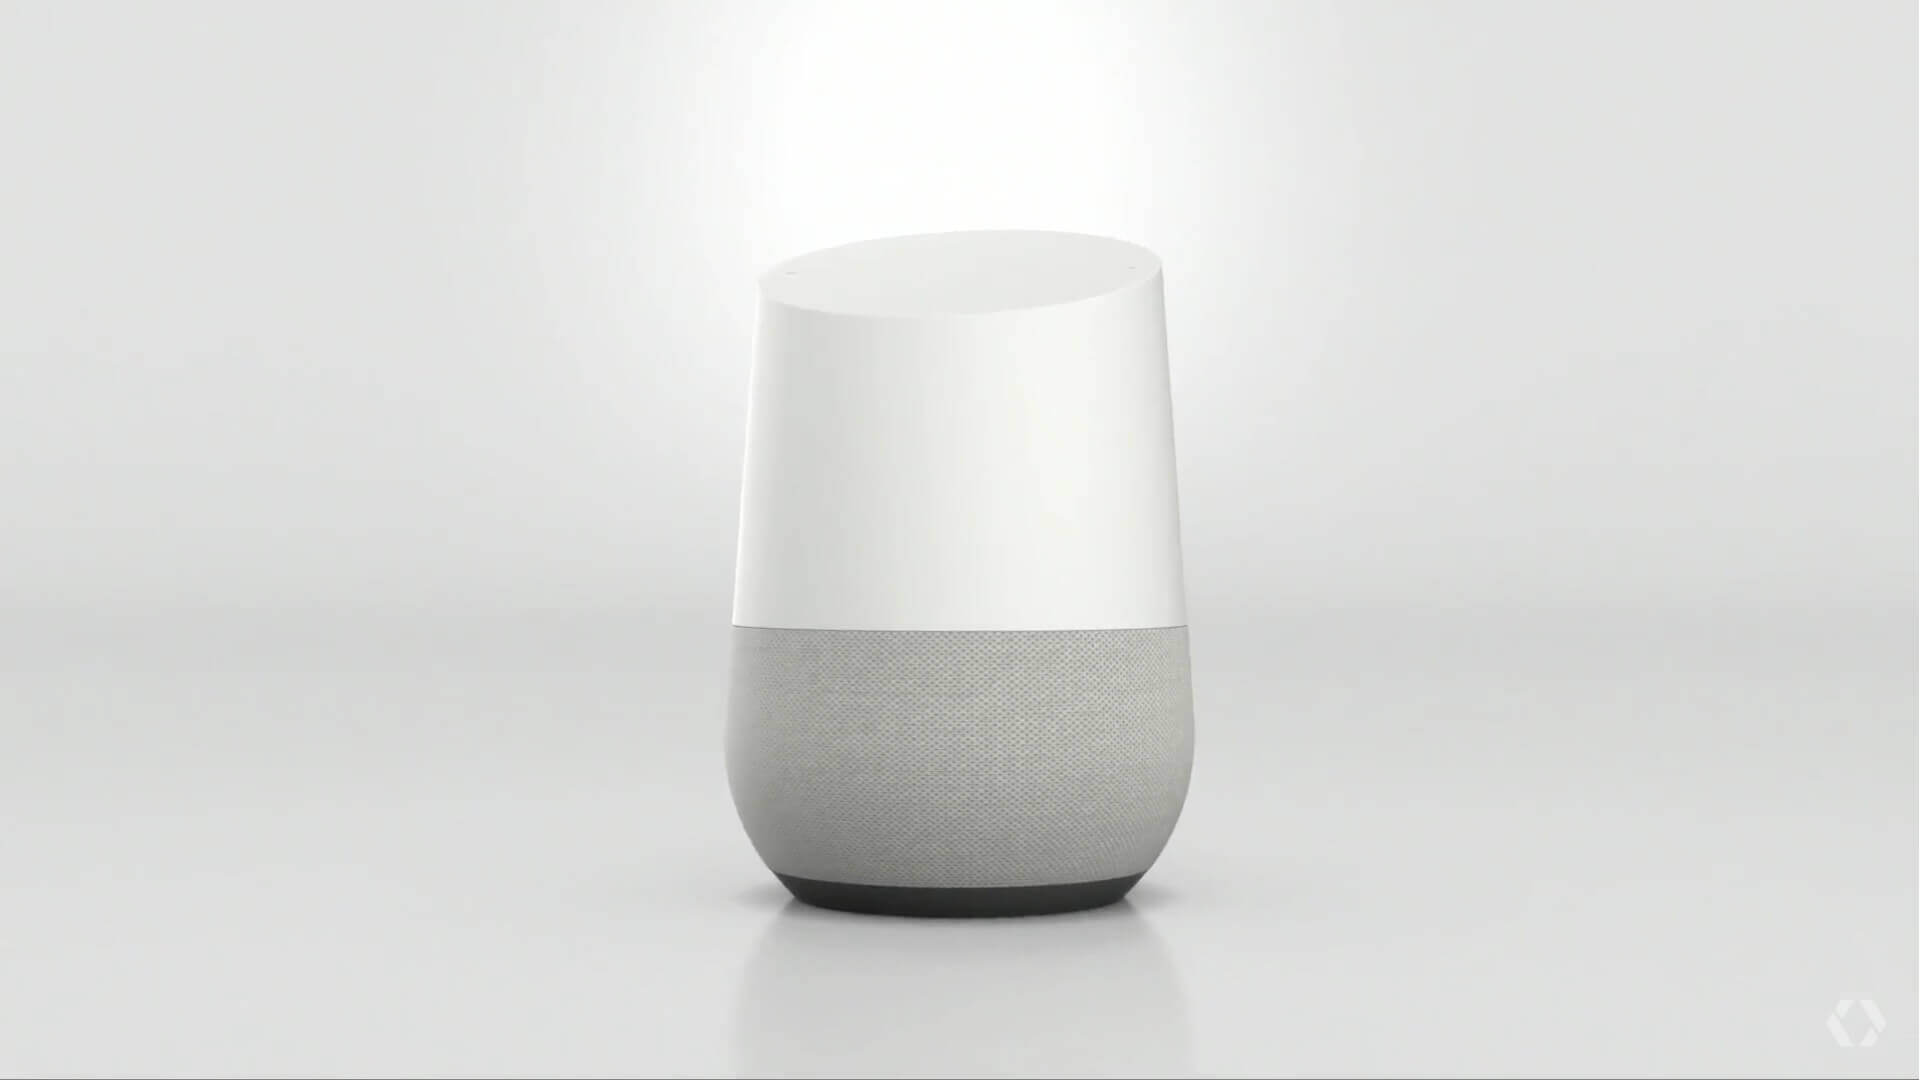 Robot Google Home